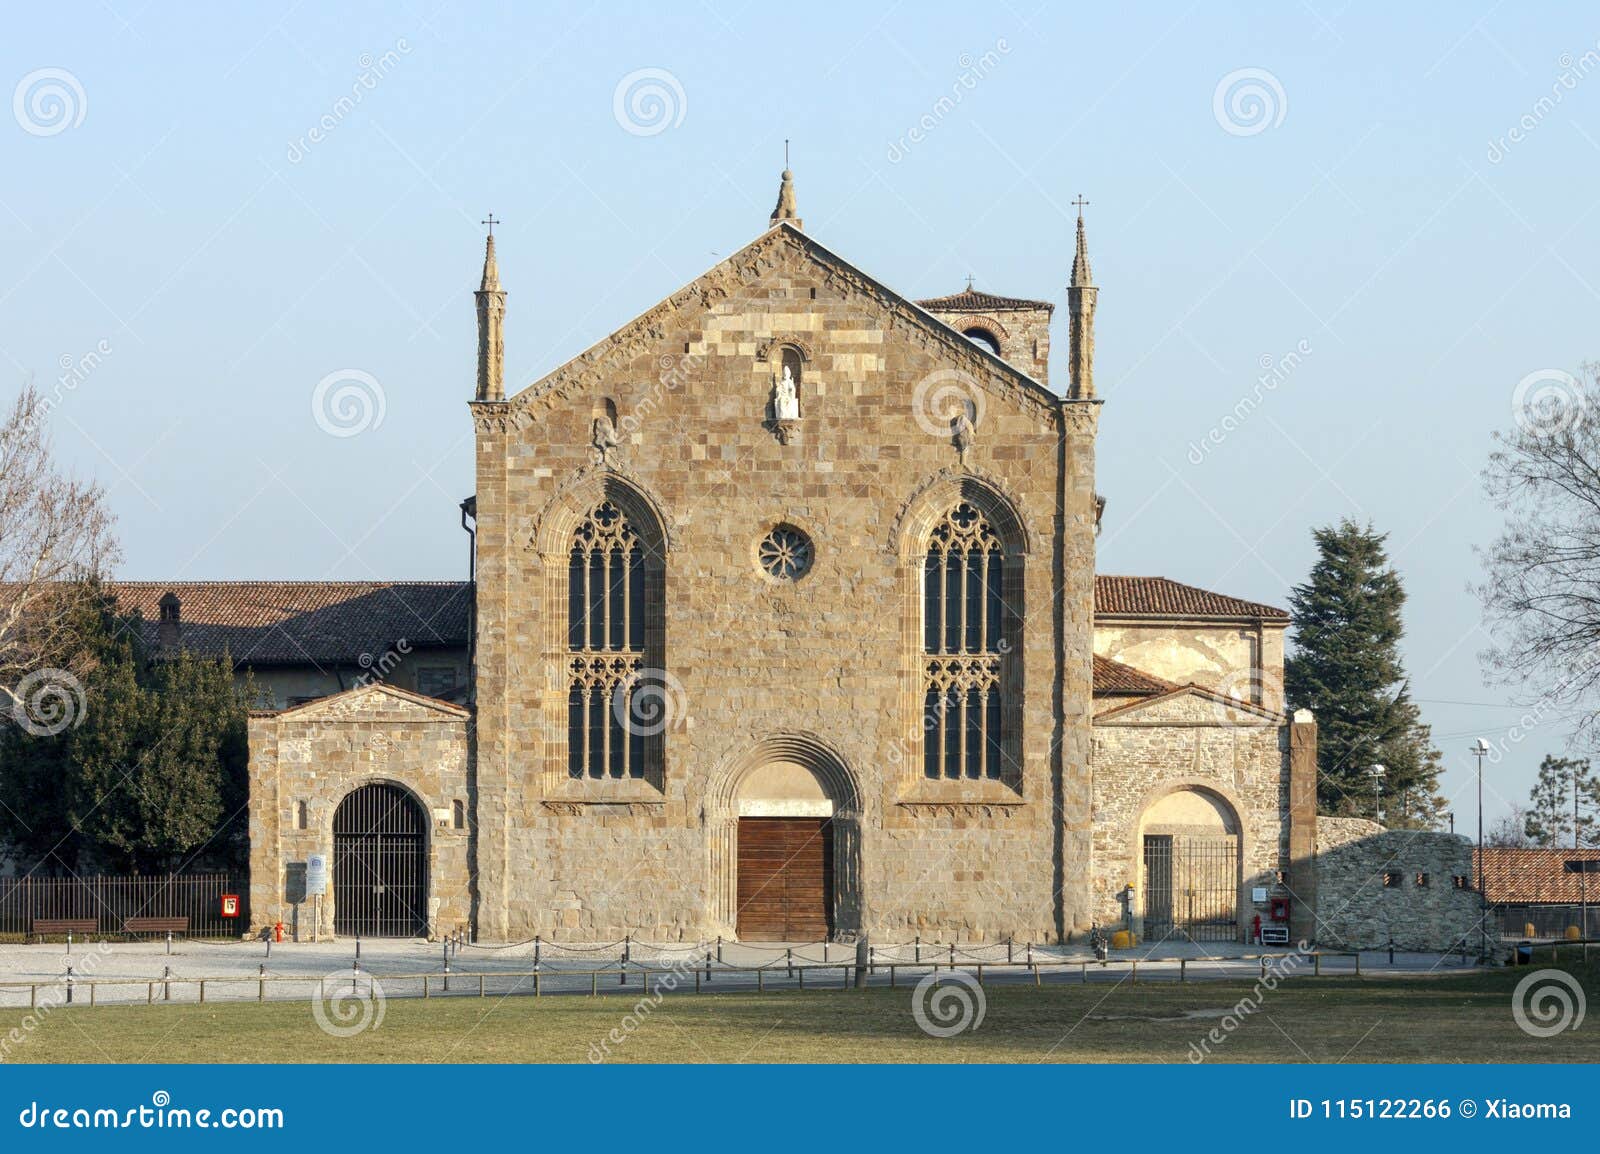 ex church of sant`agostino, university of bergamo